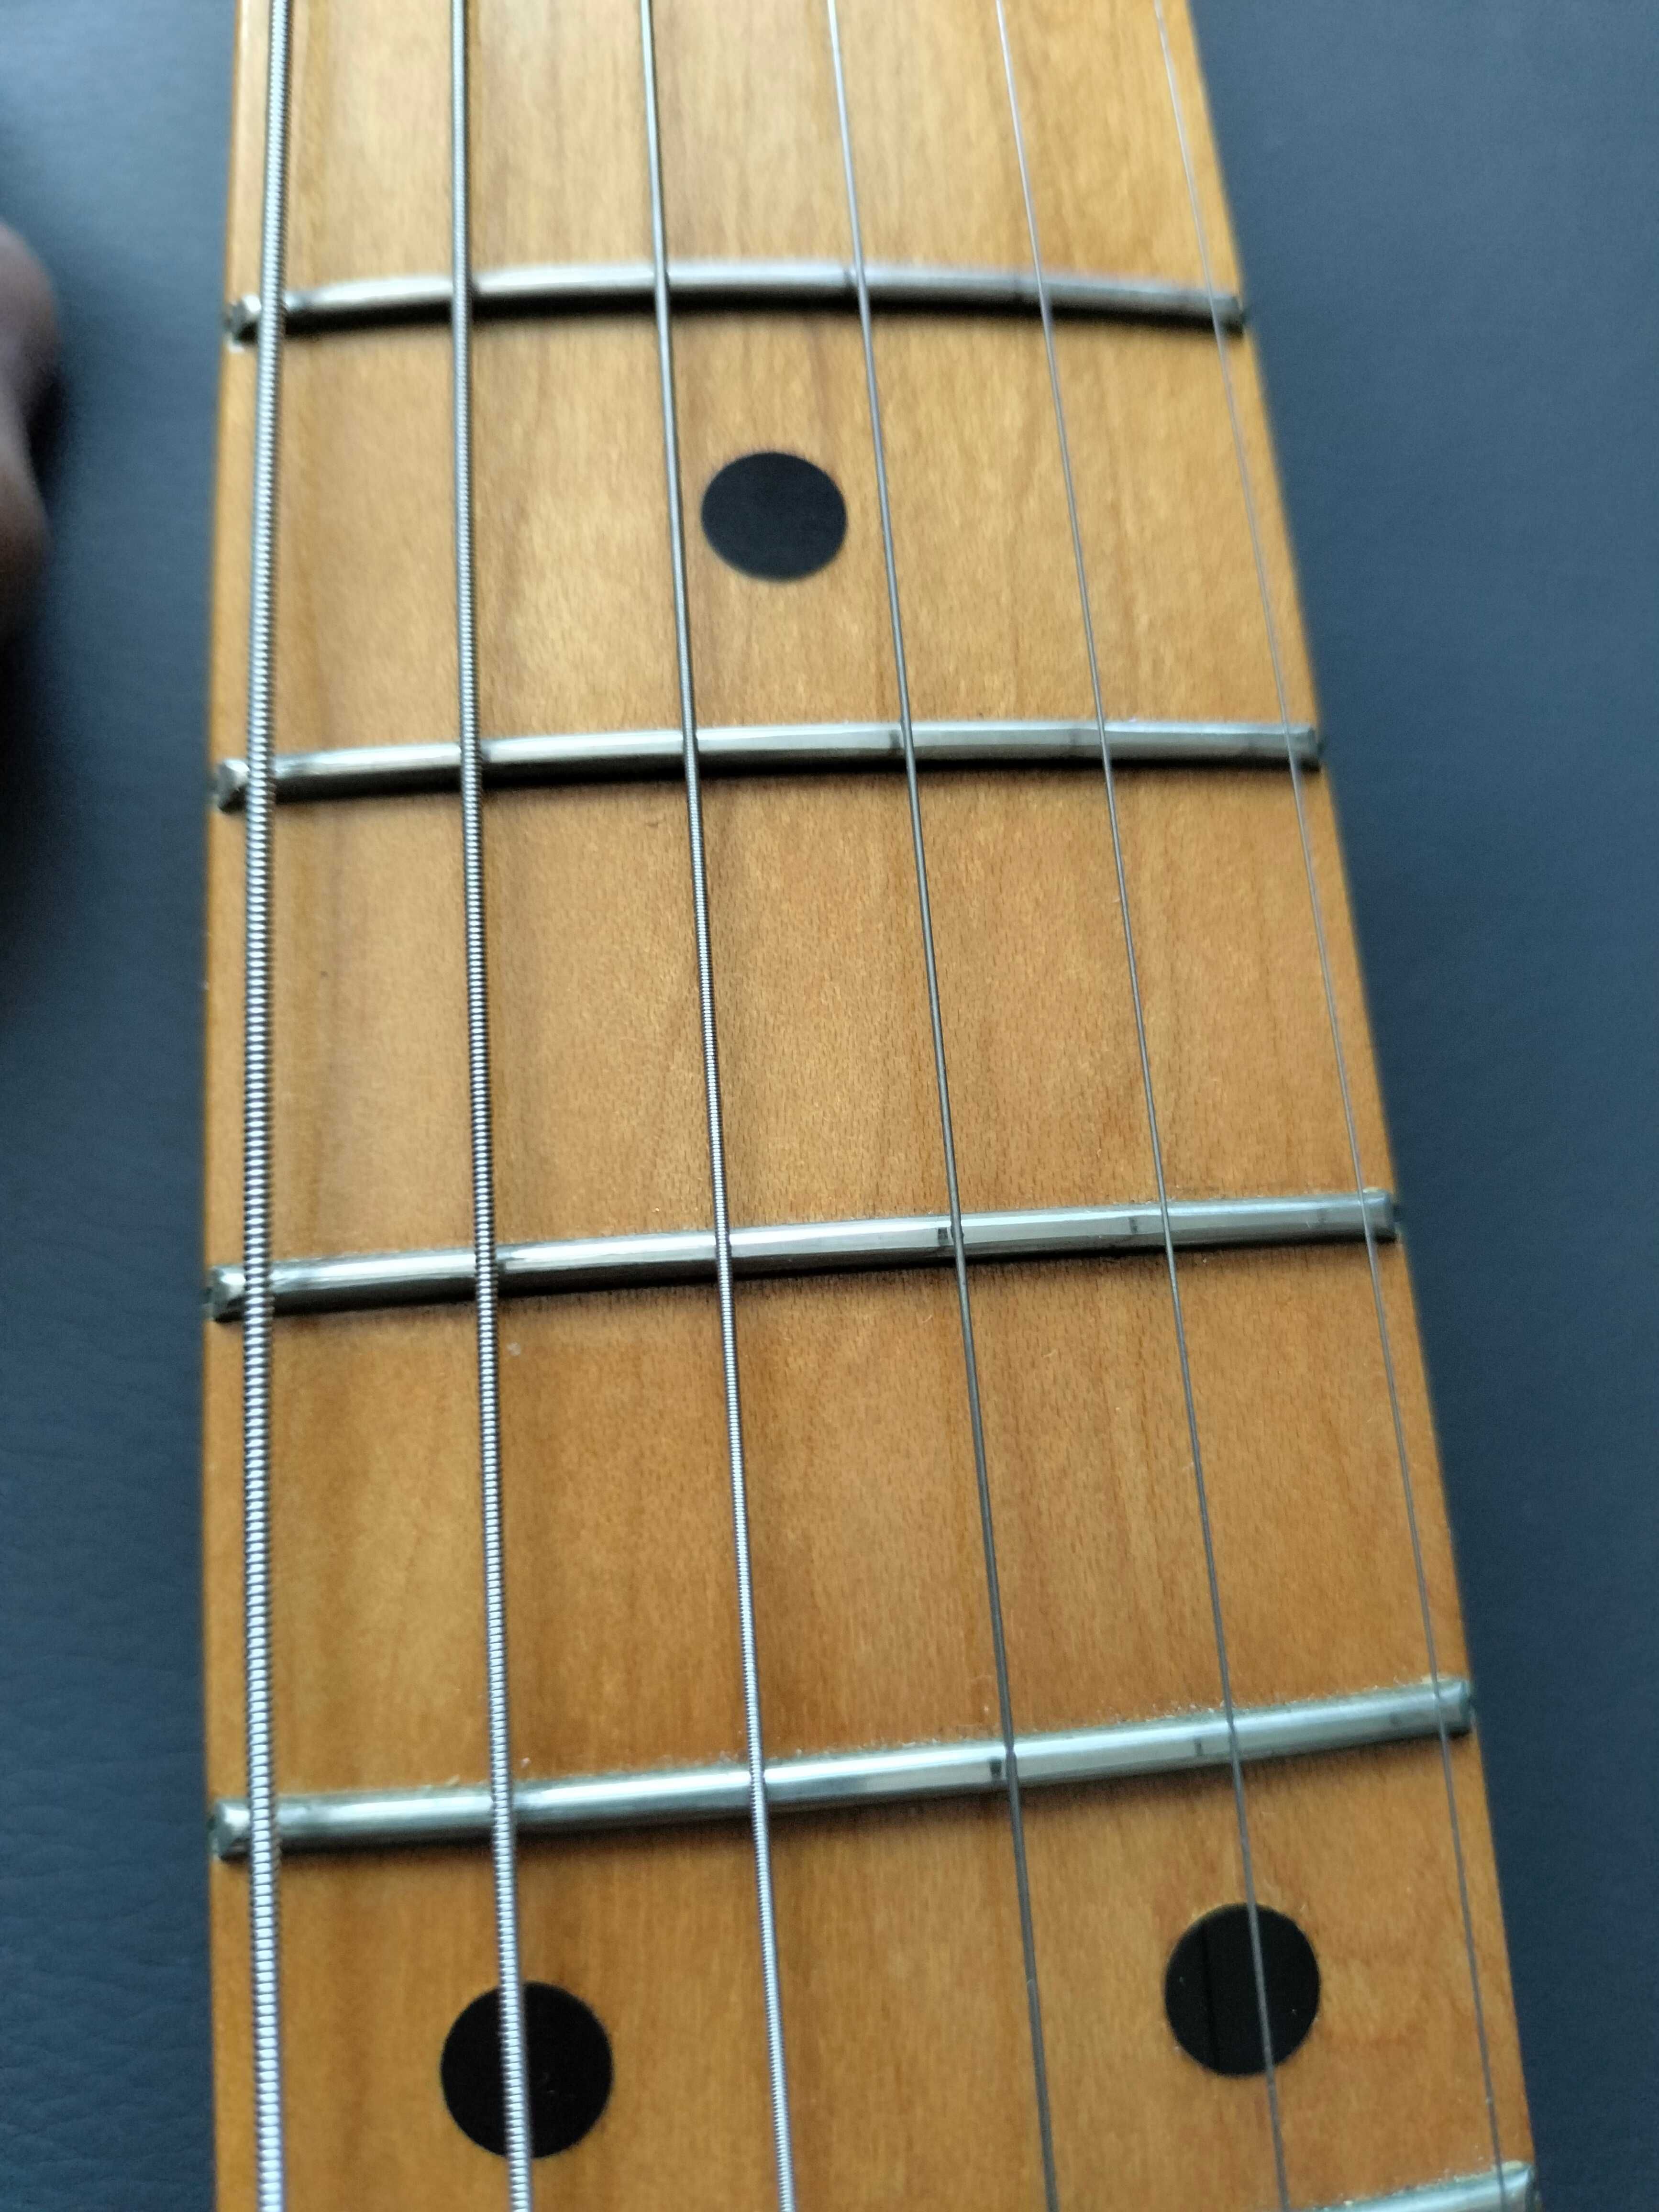 Fender Stratocaster Japan